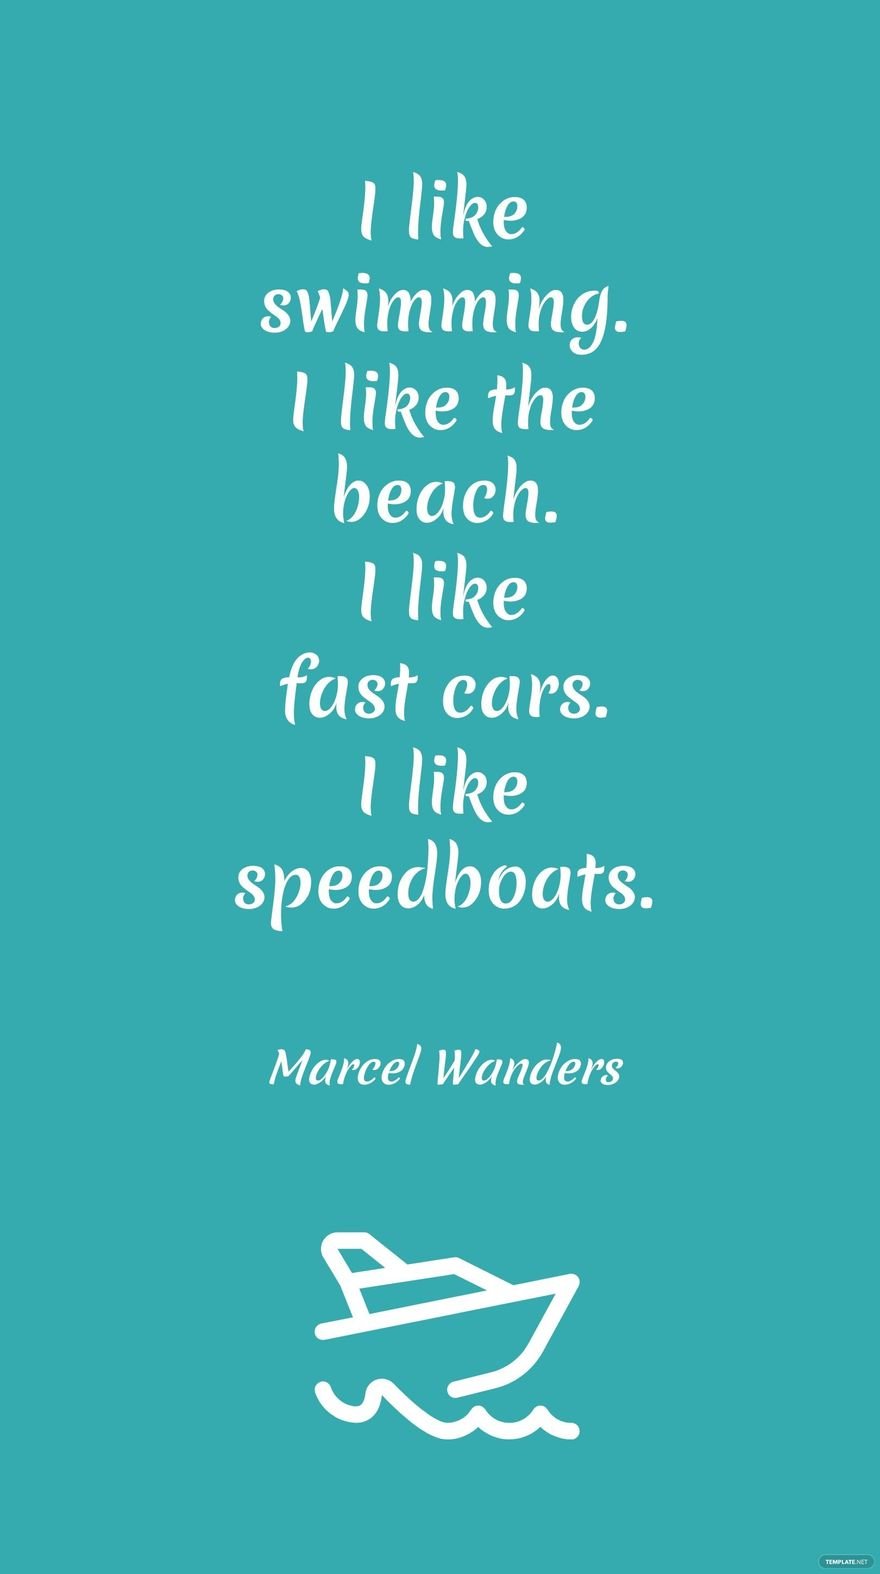 Marcel Wanders - I like swimming. I like the beach. I like fast cars. I like speedboats.